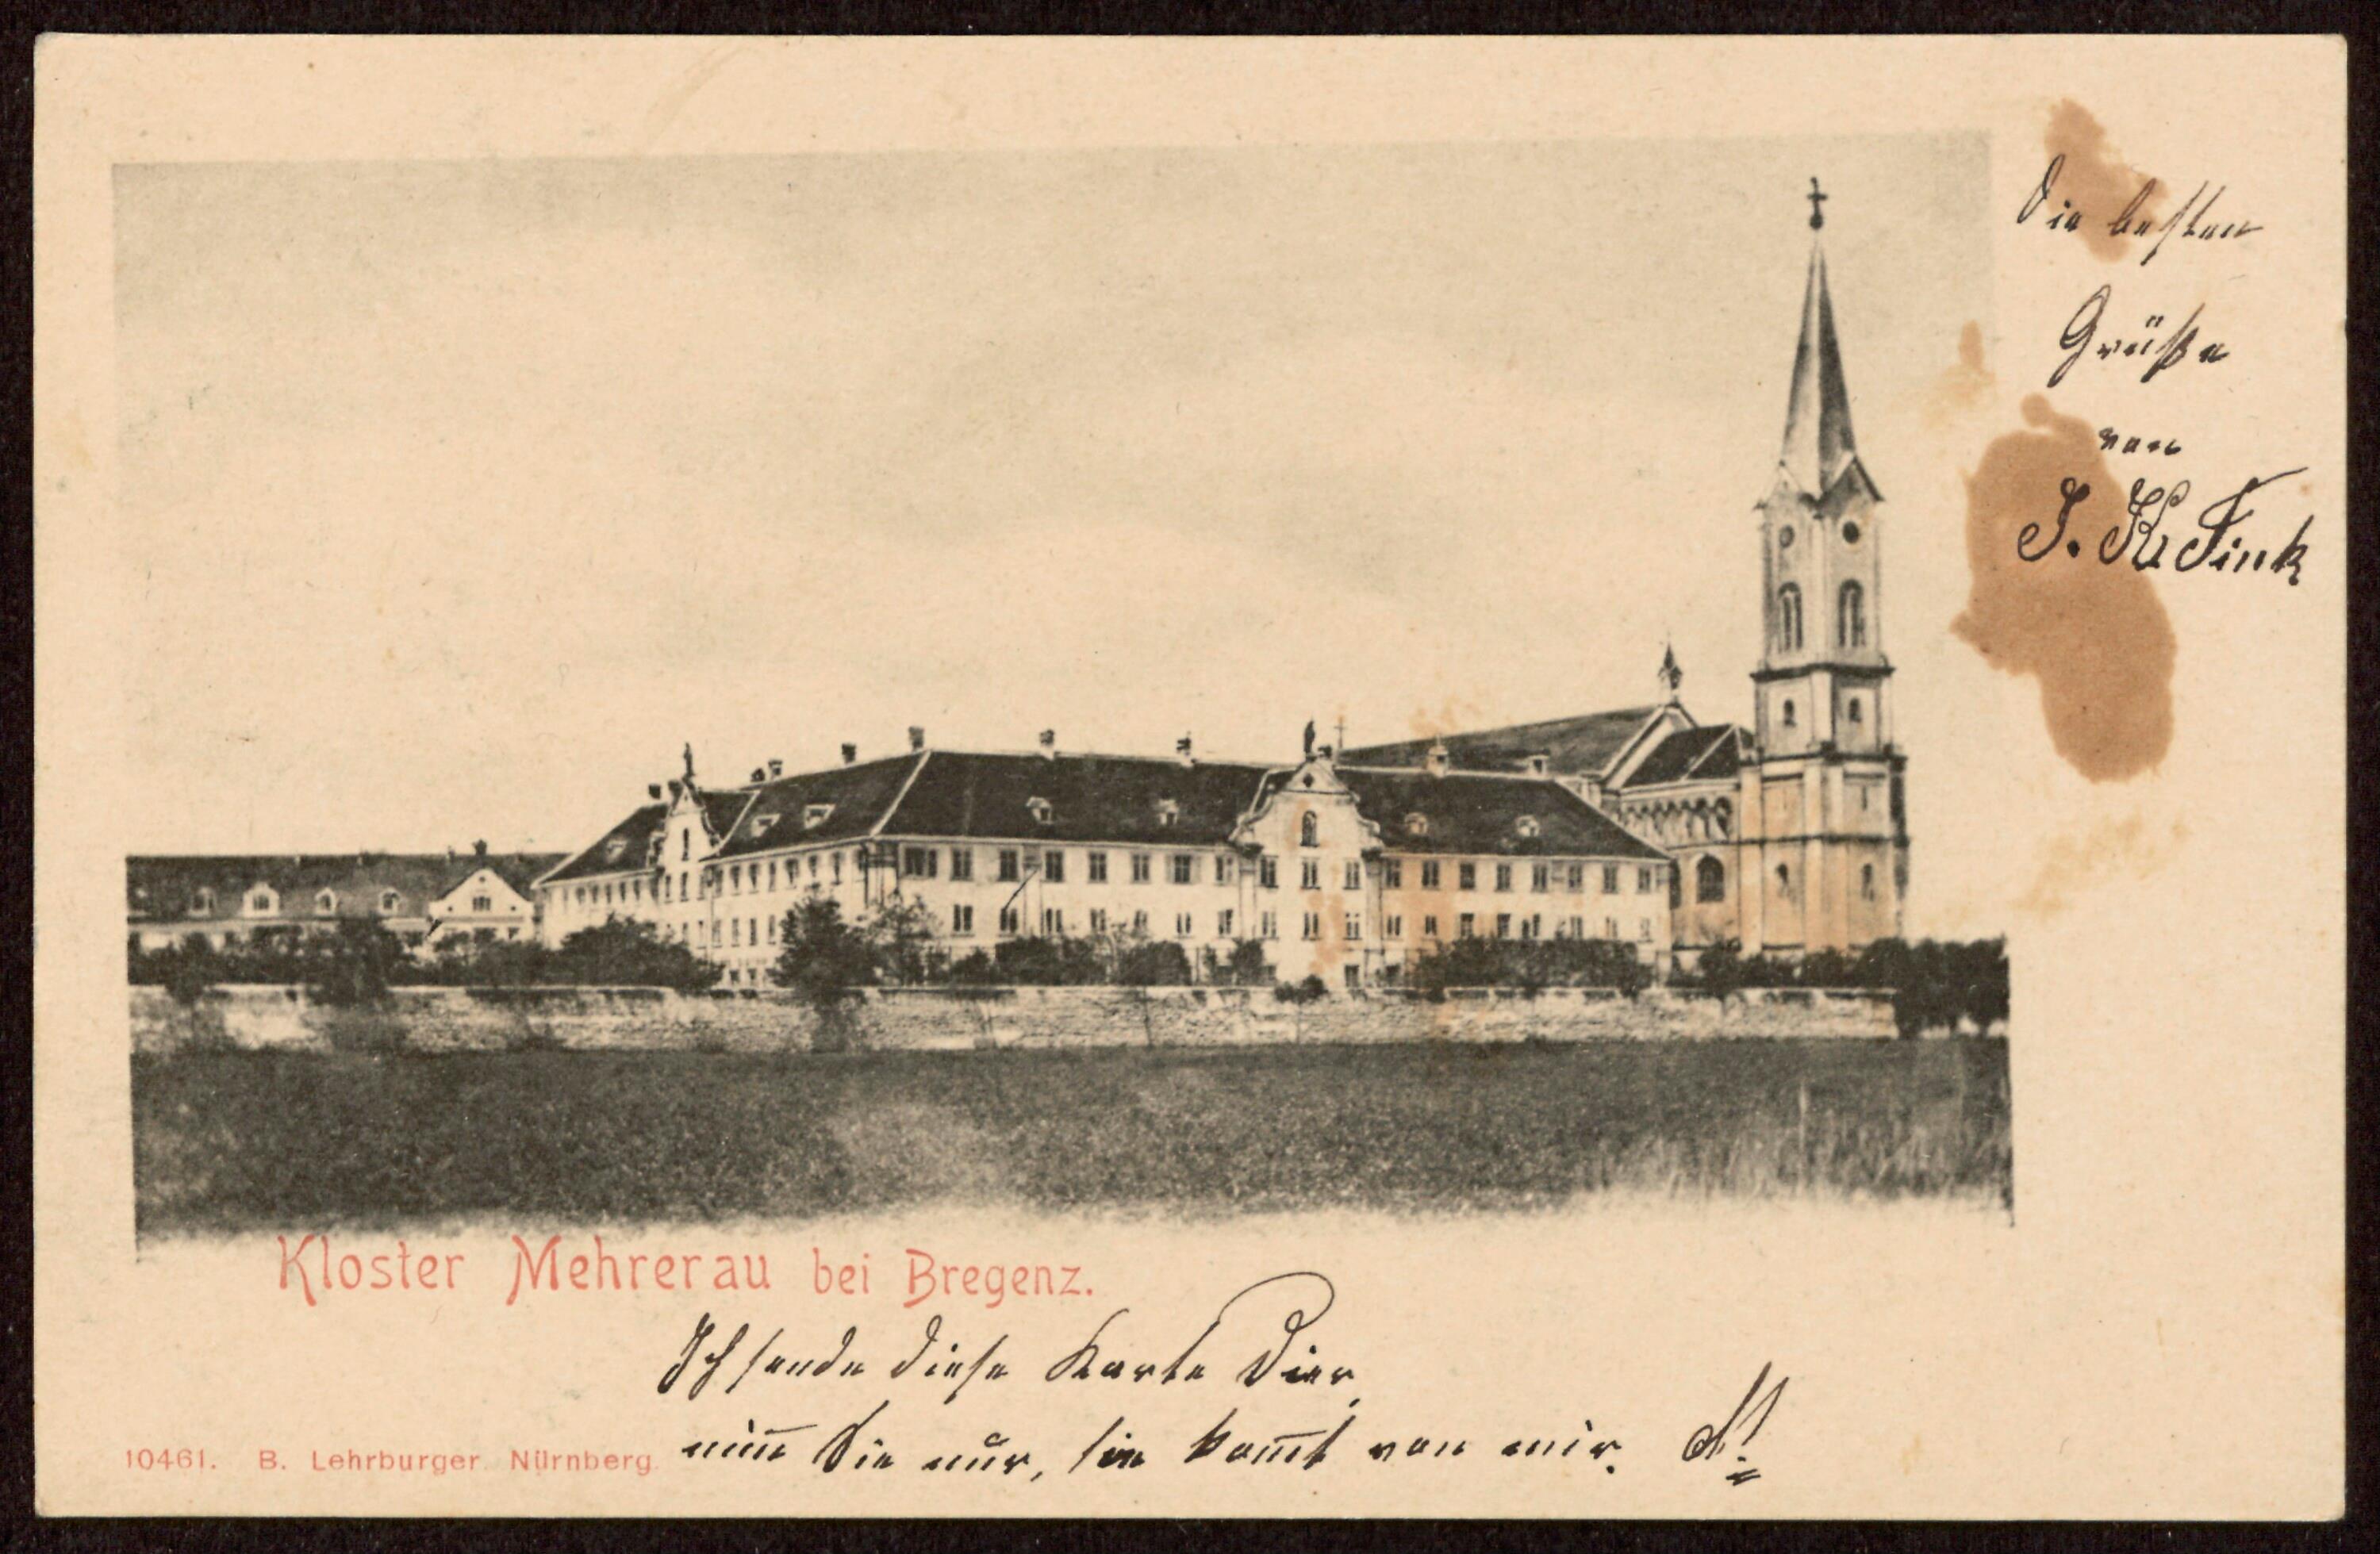 Kloster Mehrerau bei Bregenz></div>


    <hr>
    <div class=